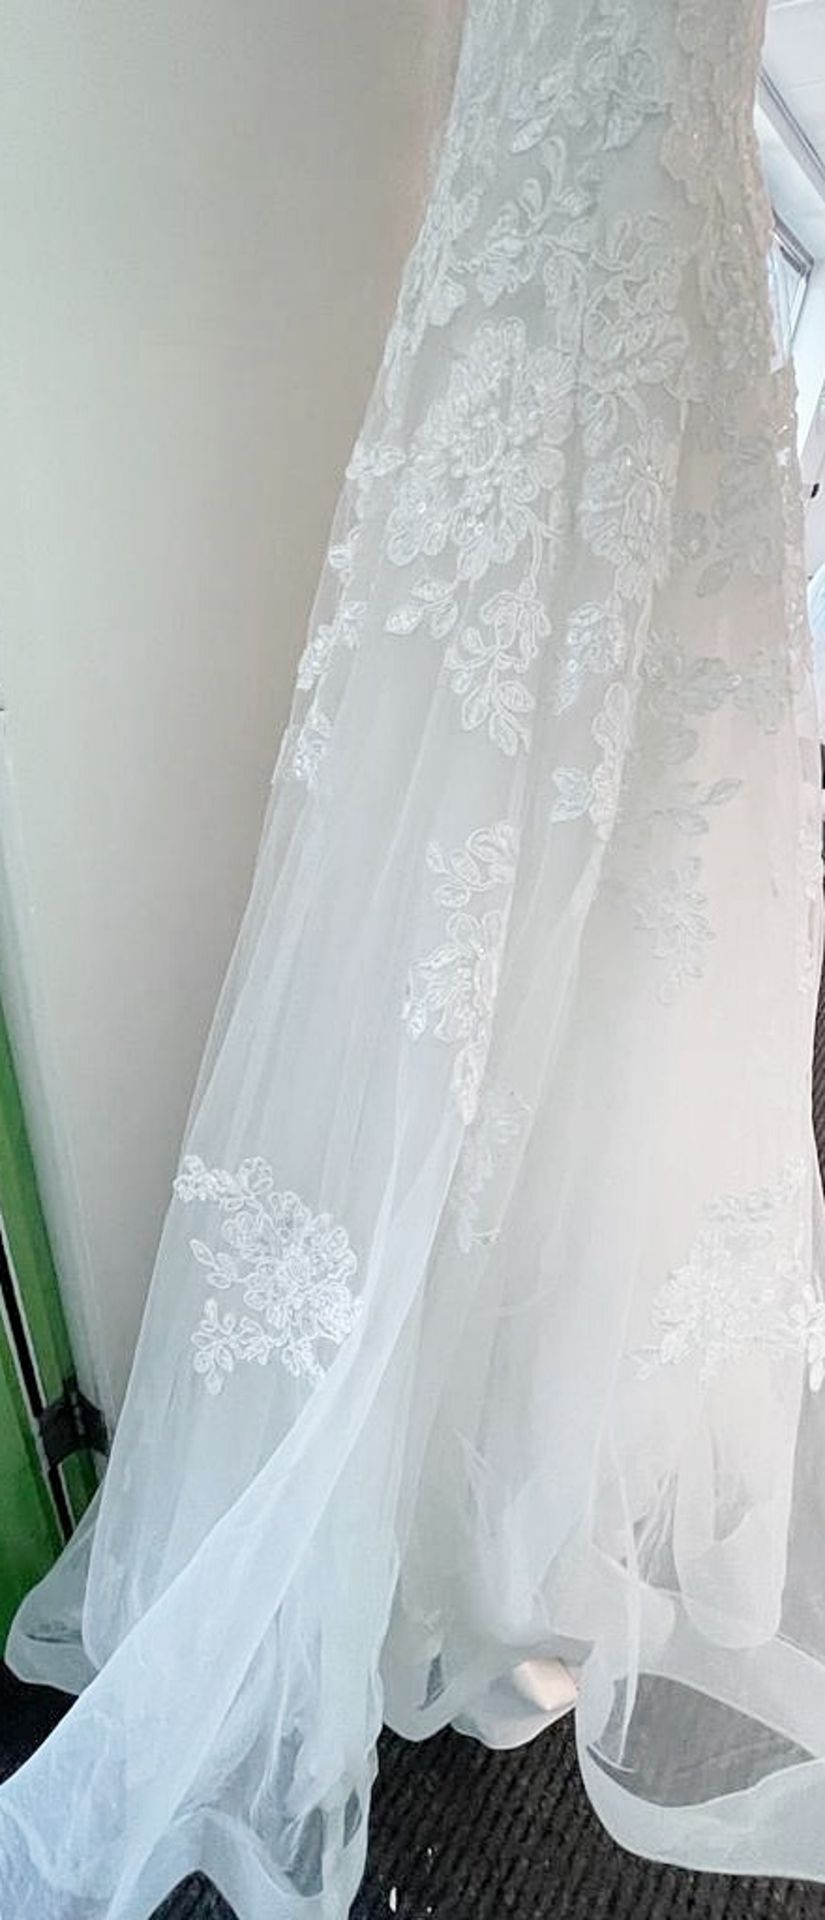 1 x MORI LEE 'Blu' Designer Mermaid Wedding Dress Bridal Gown, With Plunging Illusion V-Neckline - - Image 6 of 21